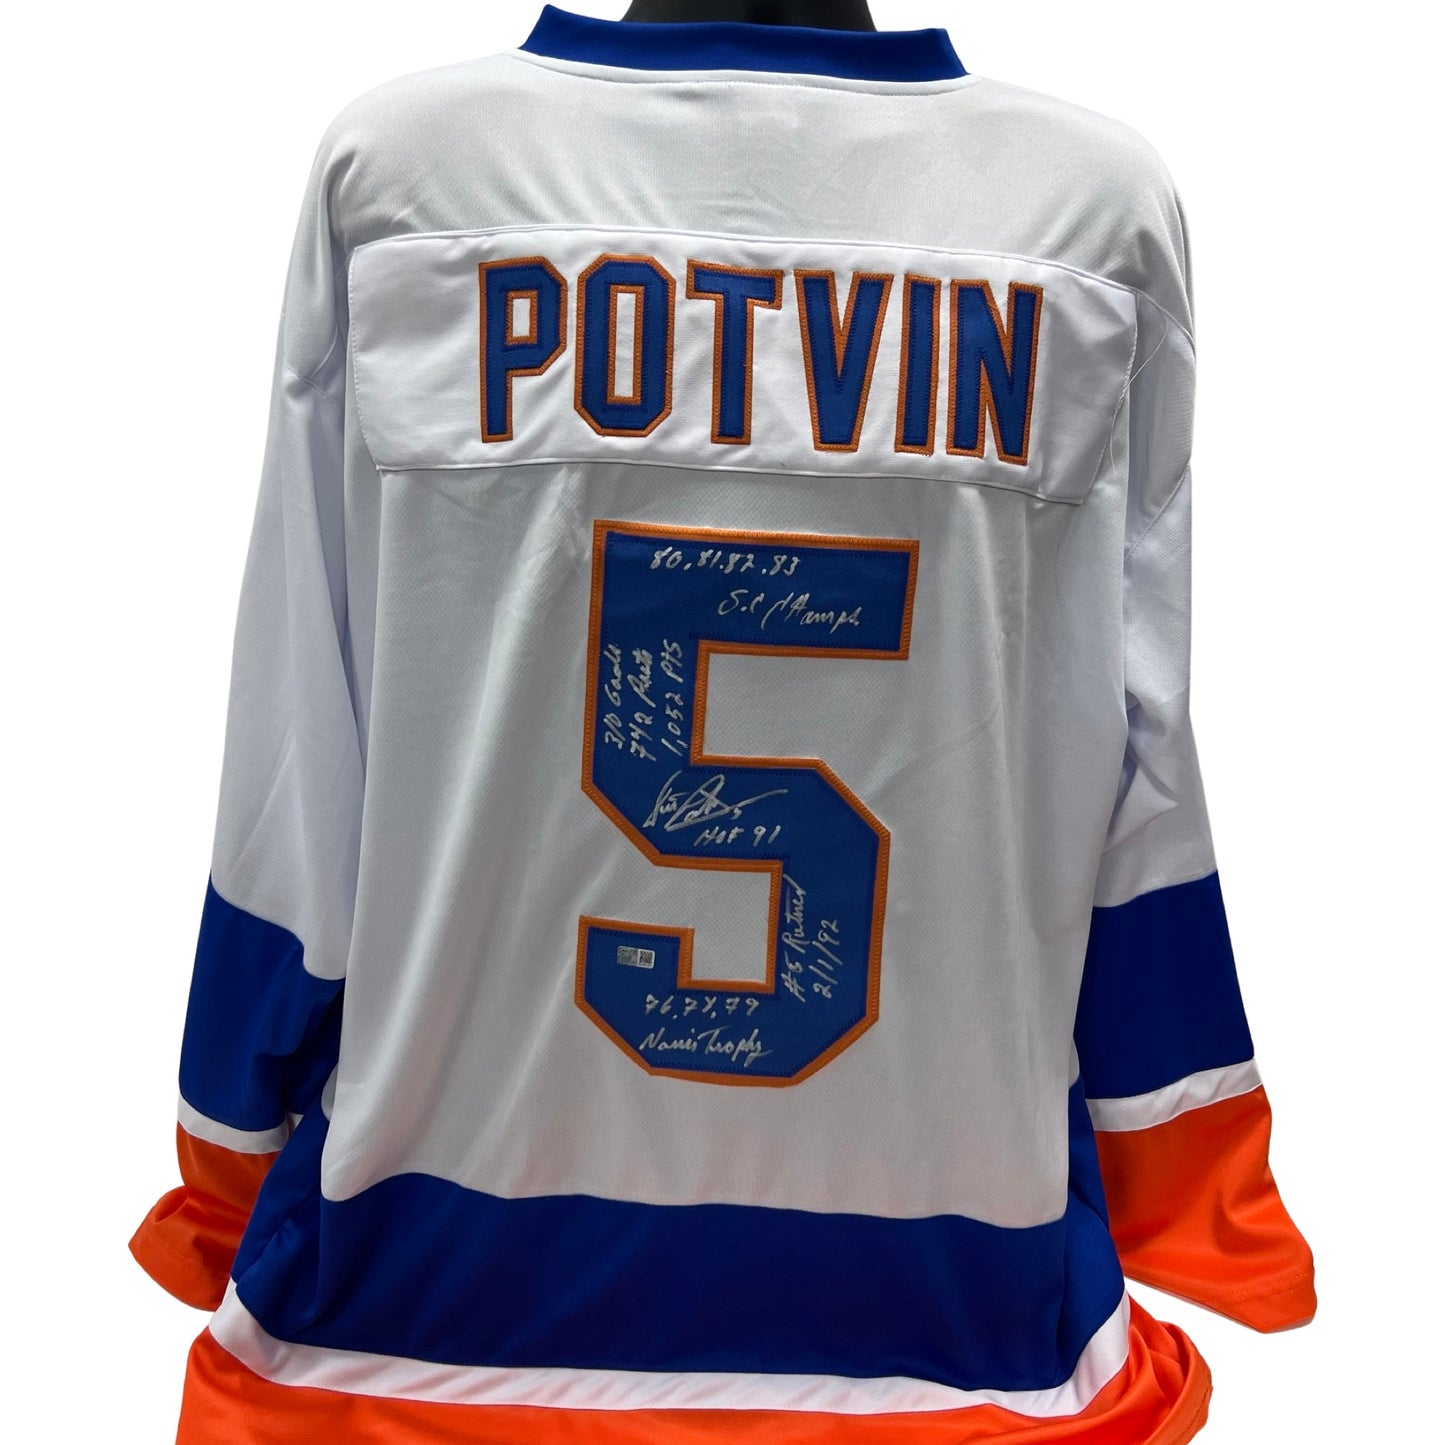 Denis Potvin Autographed New York Islanders White Jersey "80 81 82 83 S.C Champs, 310 Goals, 712 Assists, 1052 Points, HOF 1991, #5 Retired 2/1/92, 76, 78, 79 Norris Trophy" Steiner CX